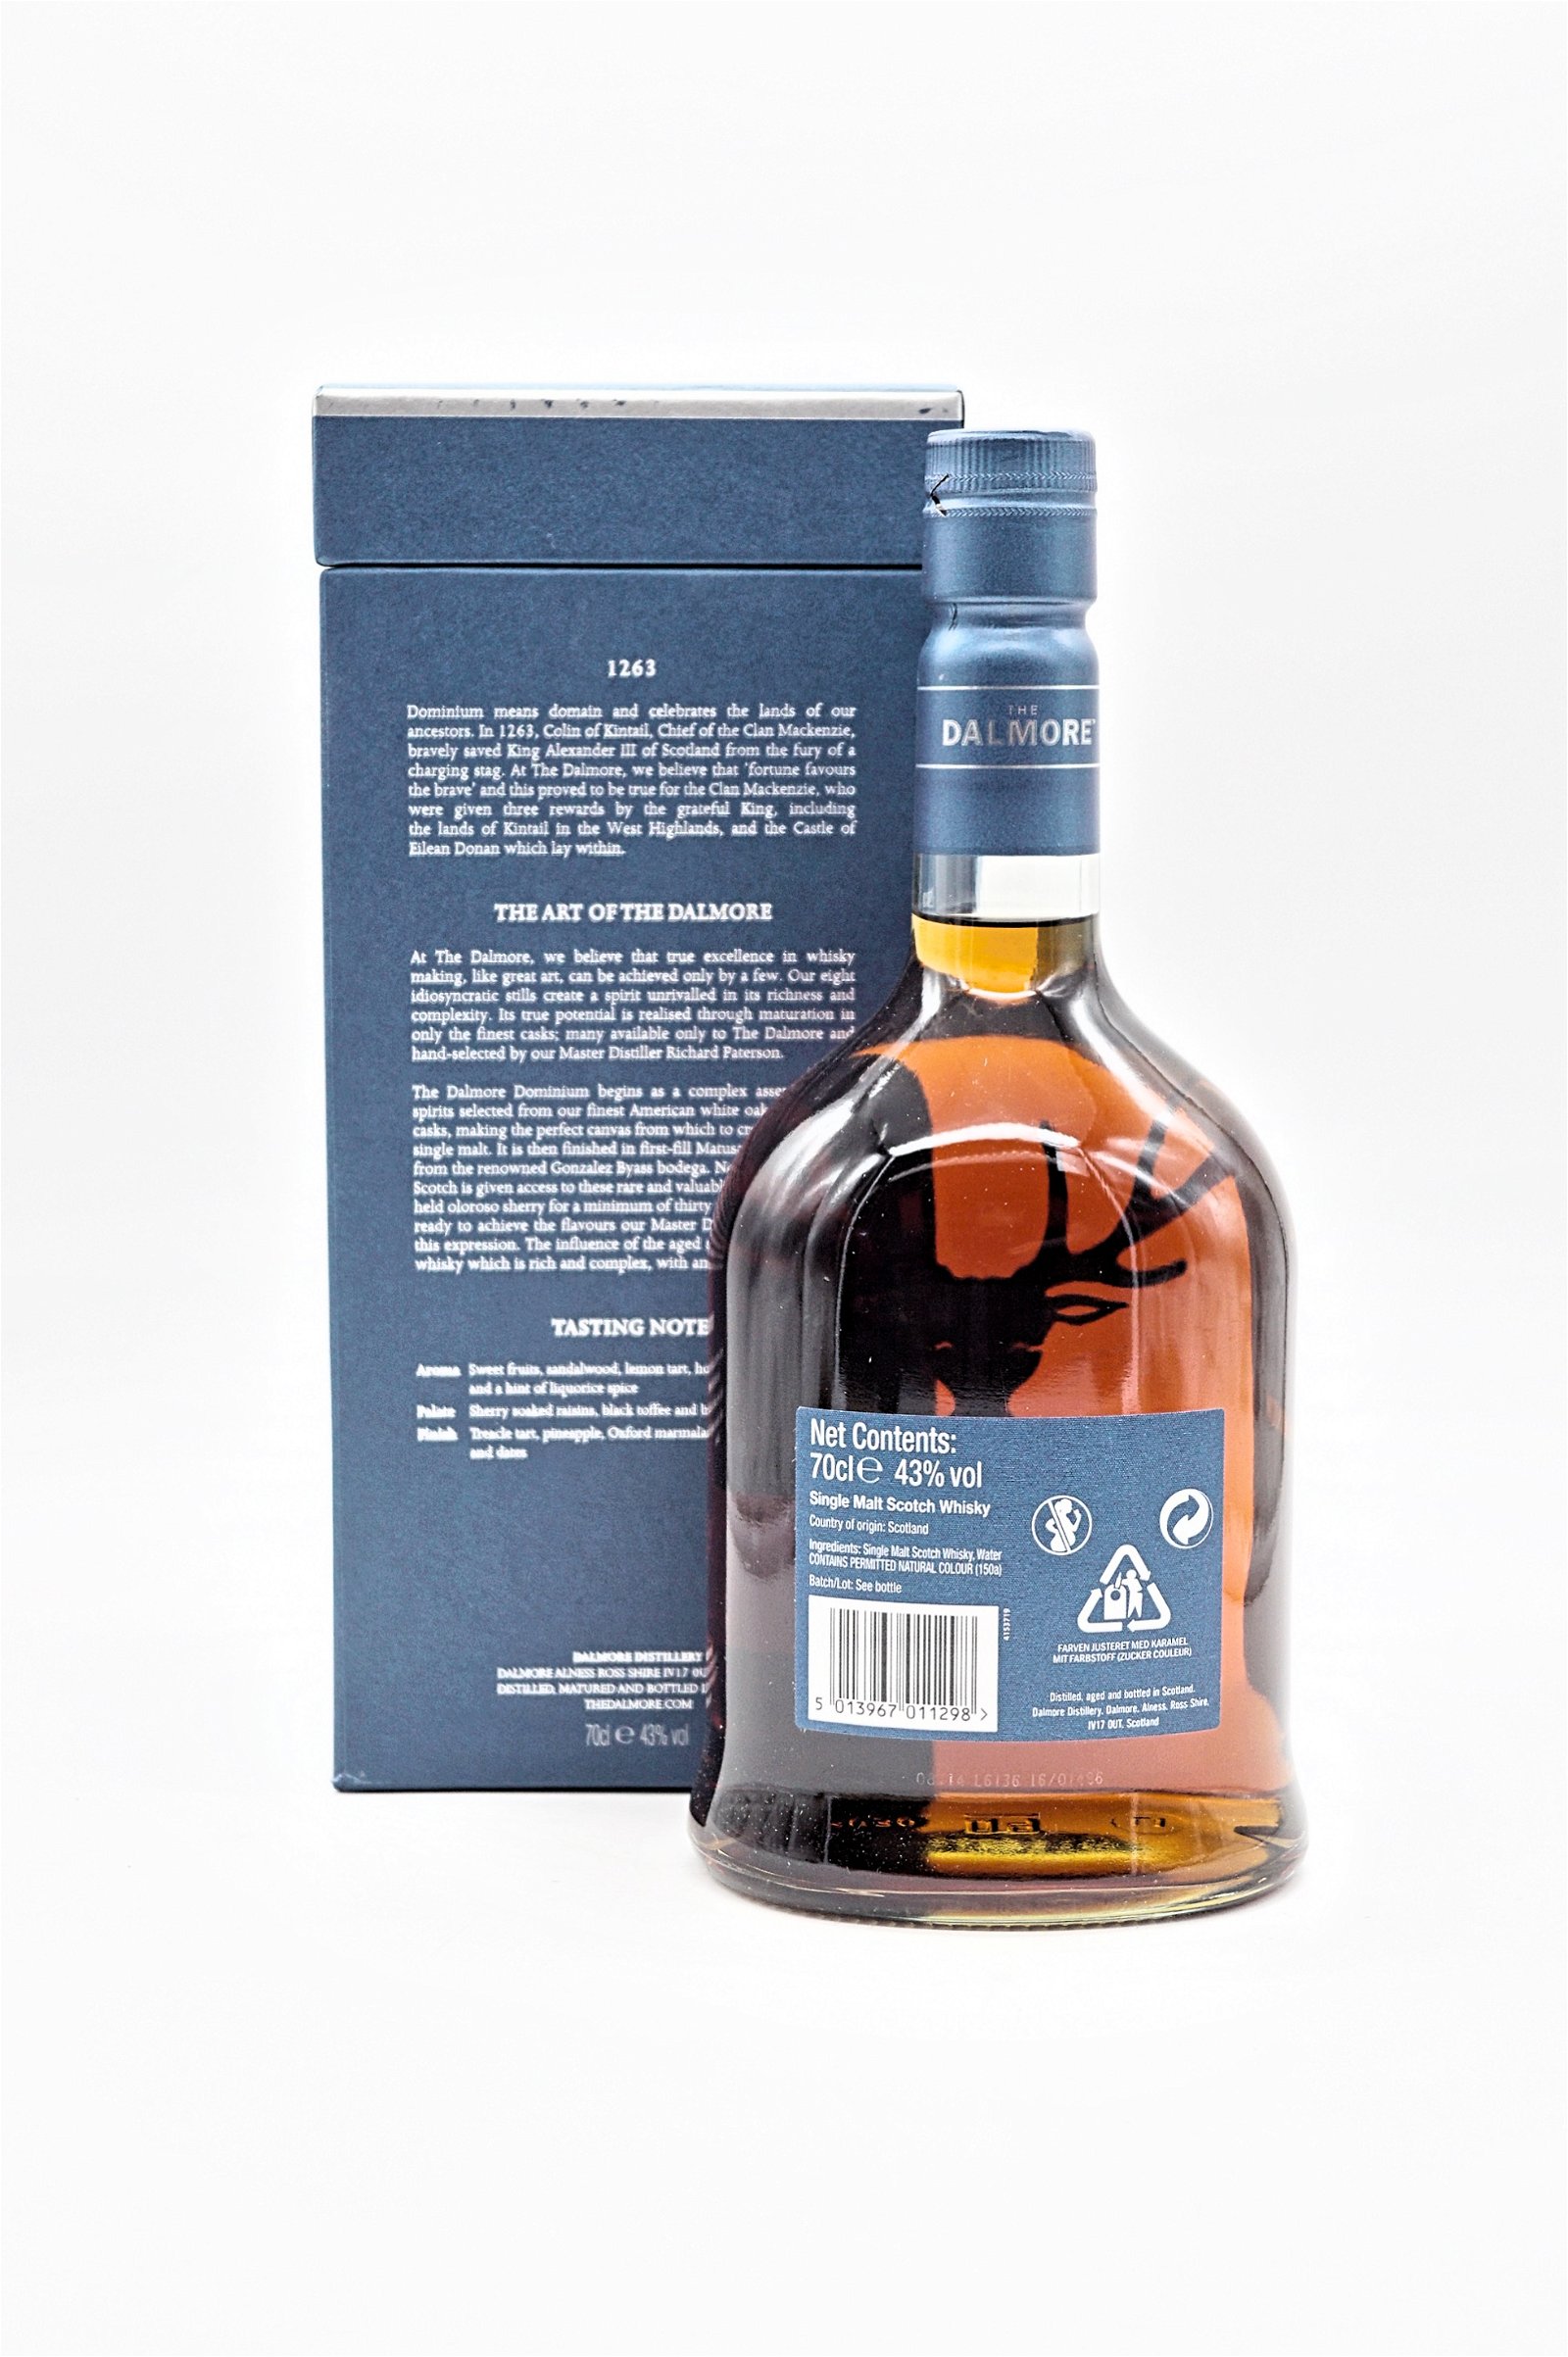 The Dalmore Dominium Highland Single Malt Scotch Whisky